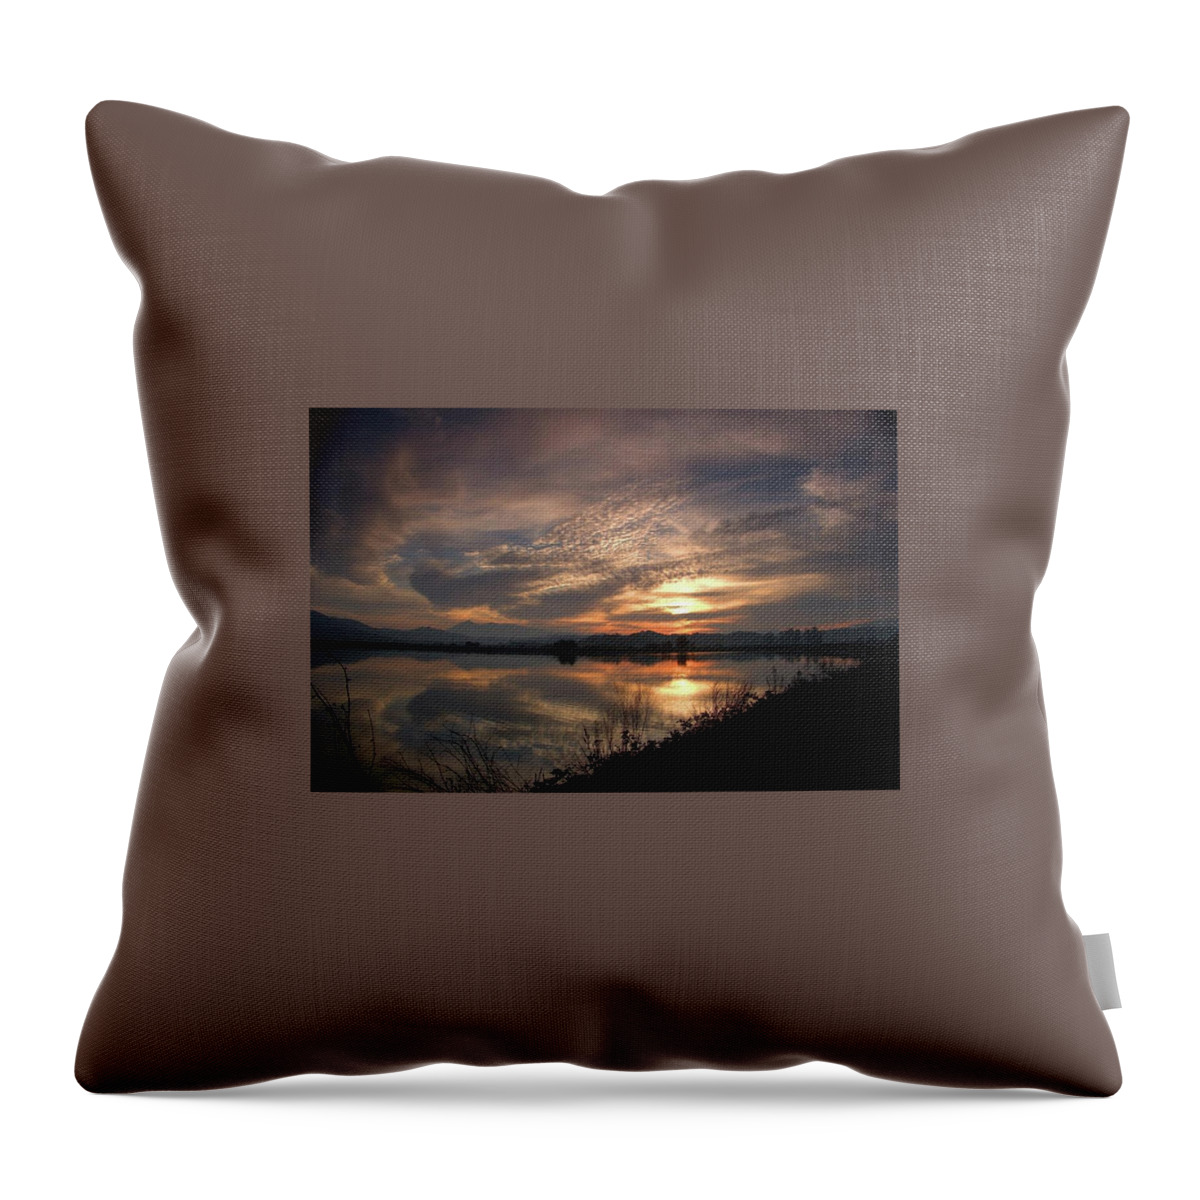 Gallinas Marsh Throw Pillow featuring the photograph Gallinas Marsh Sunset by John Parulis